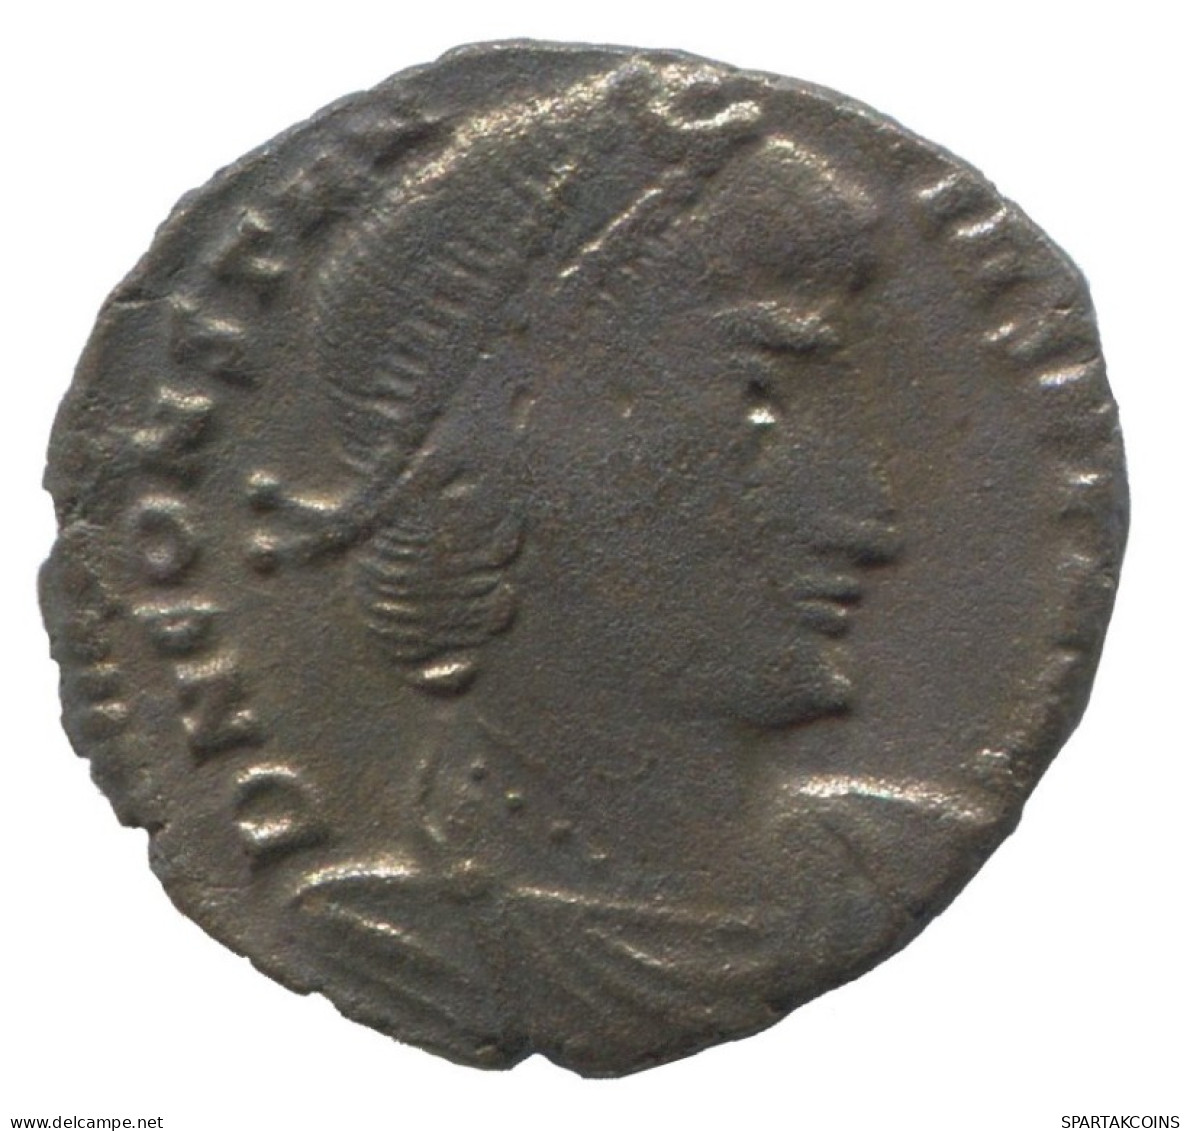 CONSTANTIUS II AD337-361 FEL TEMP REPARATIO TWO SOLDIER 1.6g/18mm #ANN1641.30.F.A - L'Empire Chrétien (307 à 363)